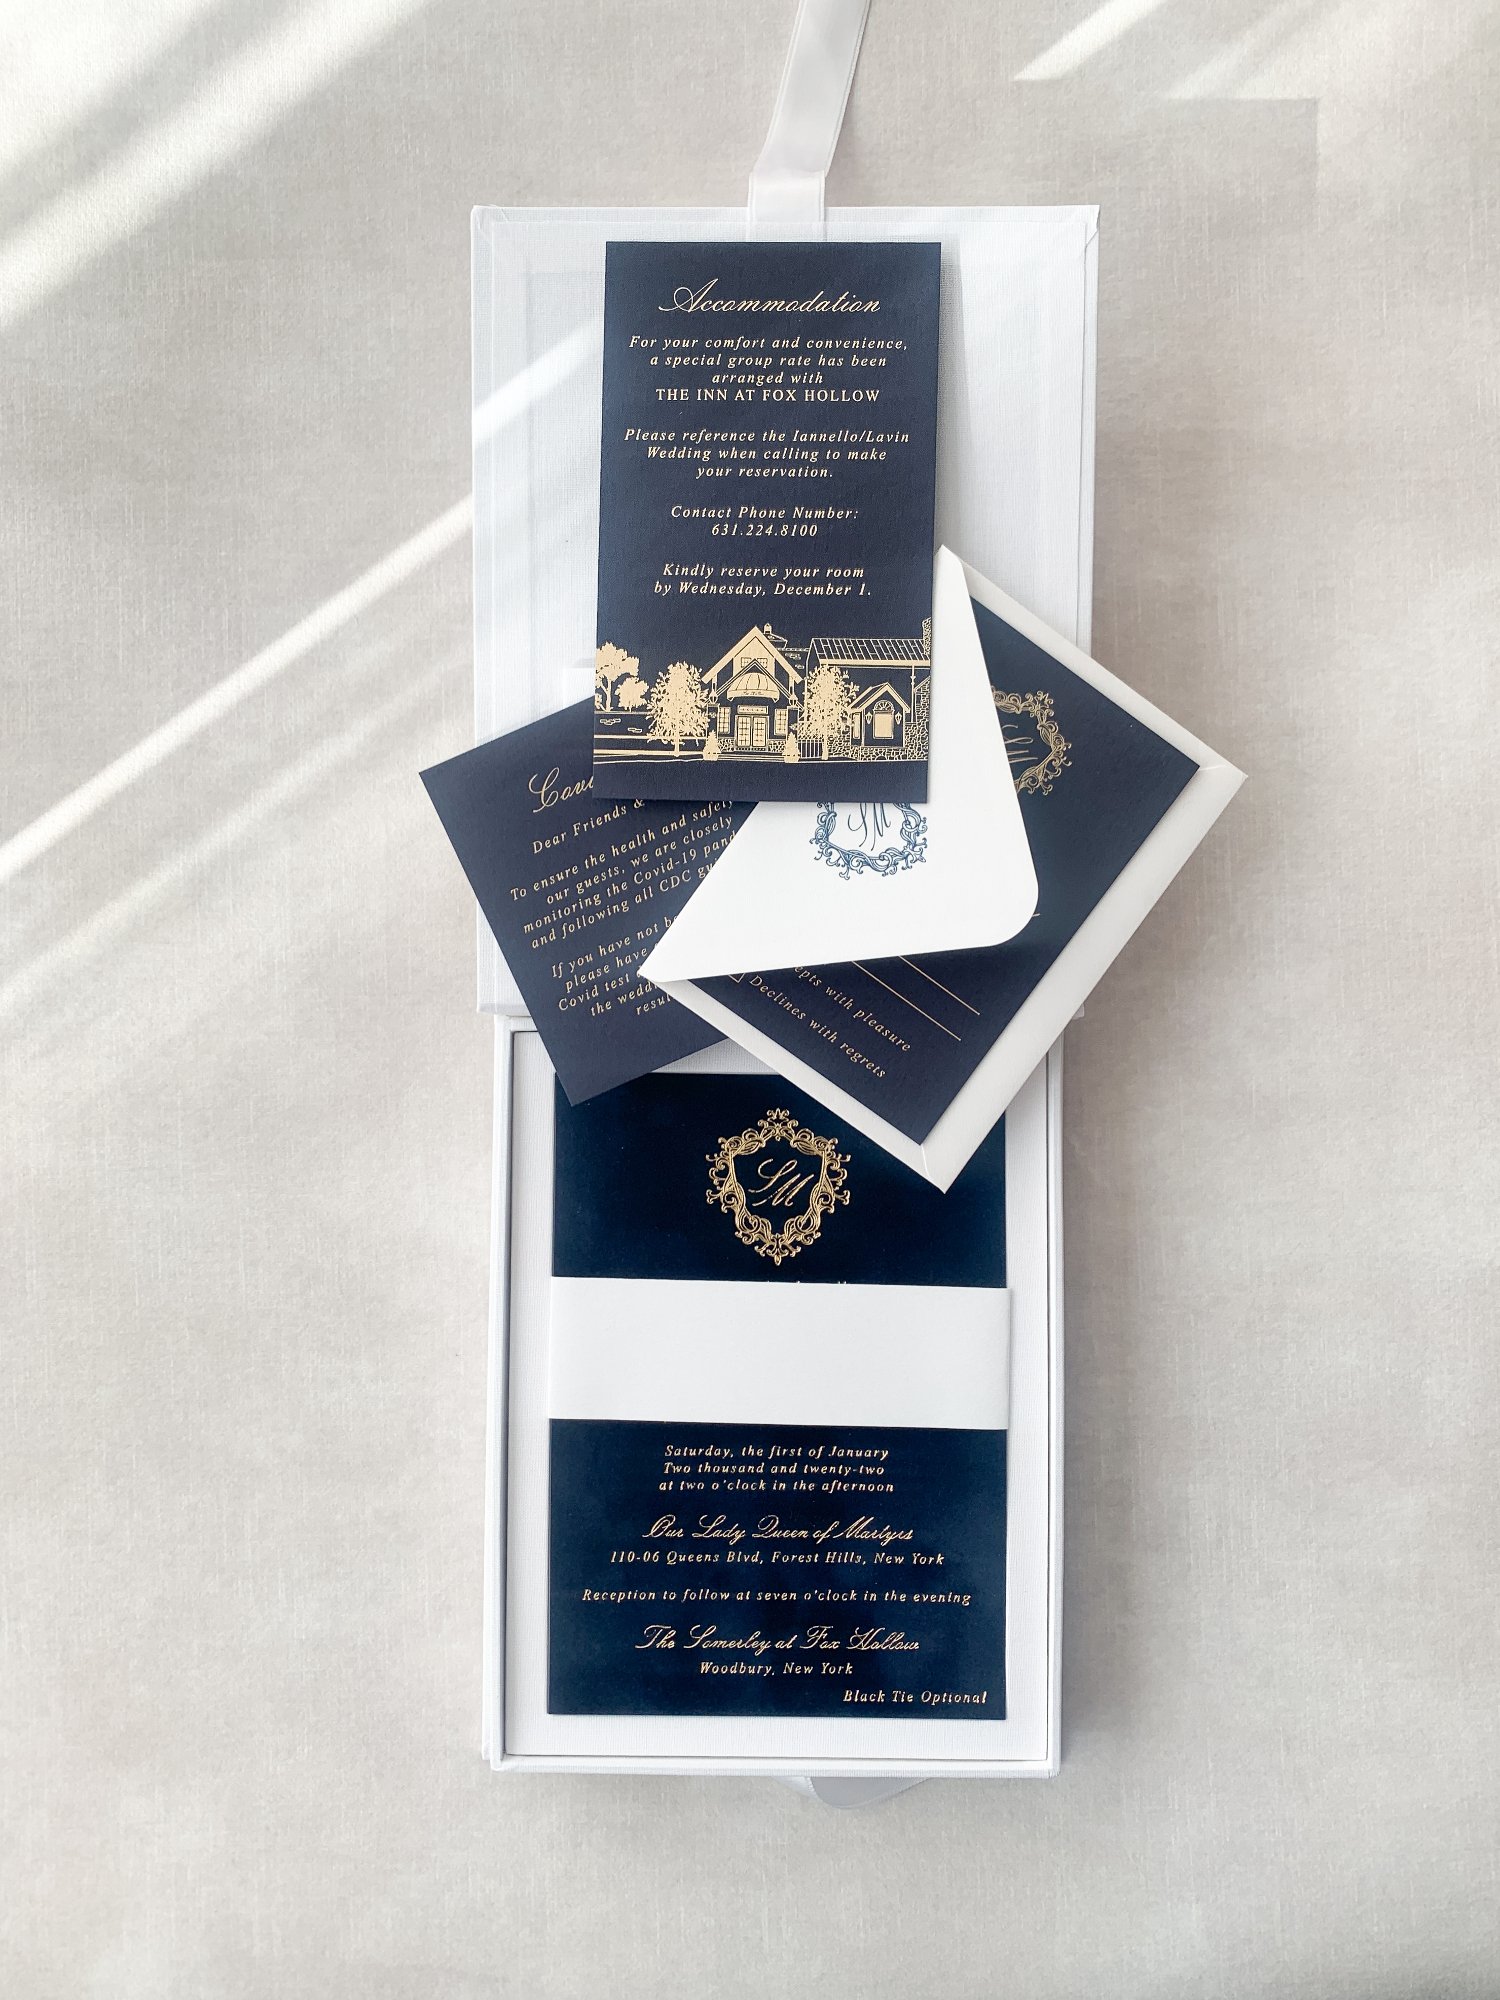 Box wedding invitation - Lettering by GRG (14).jpg